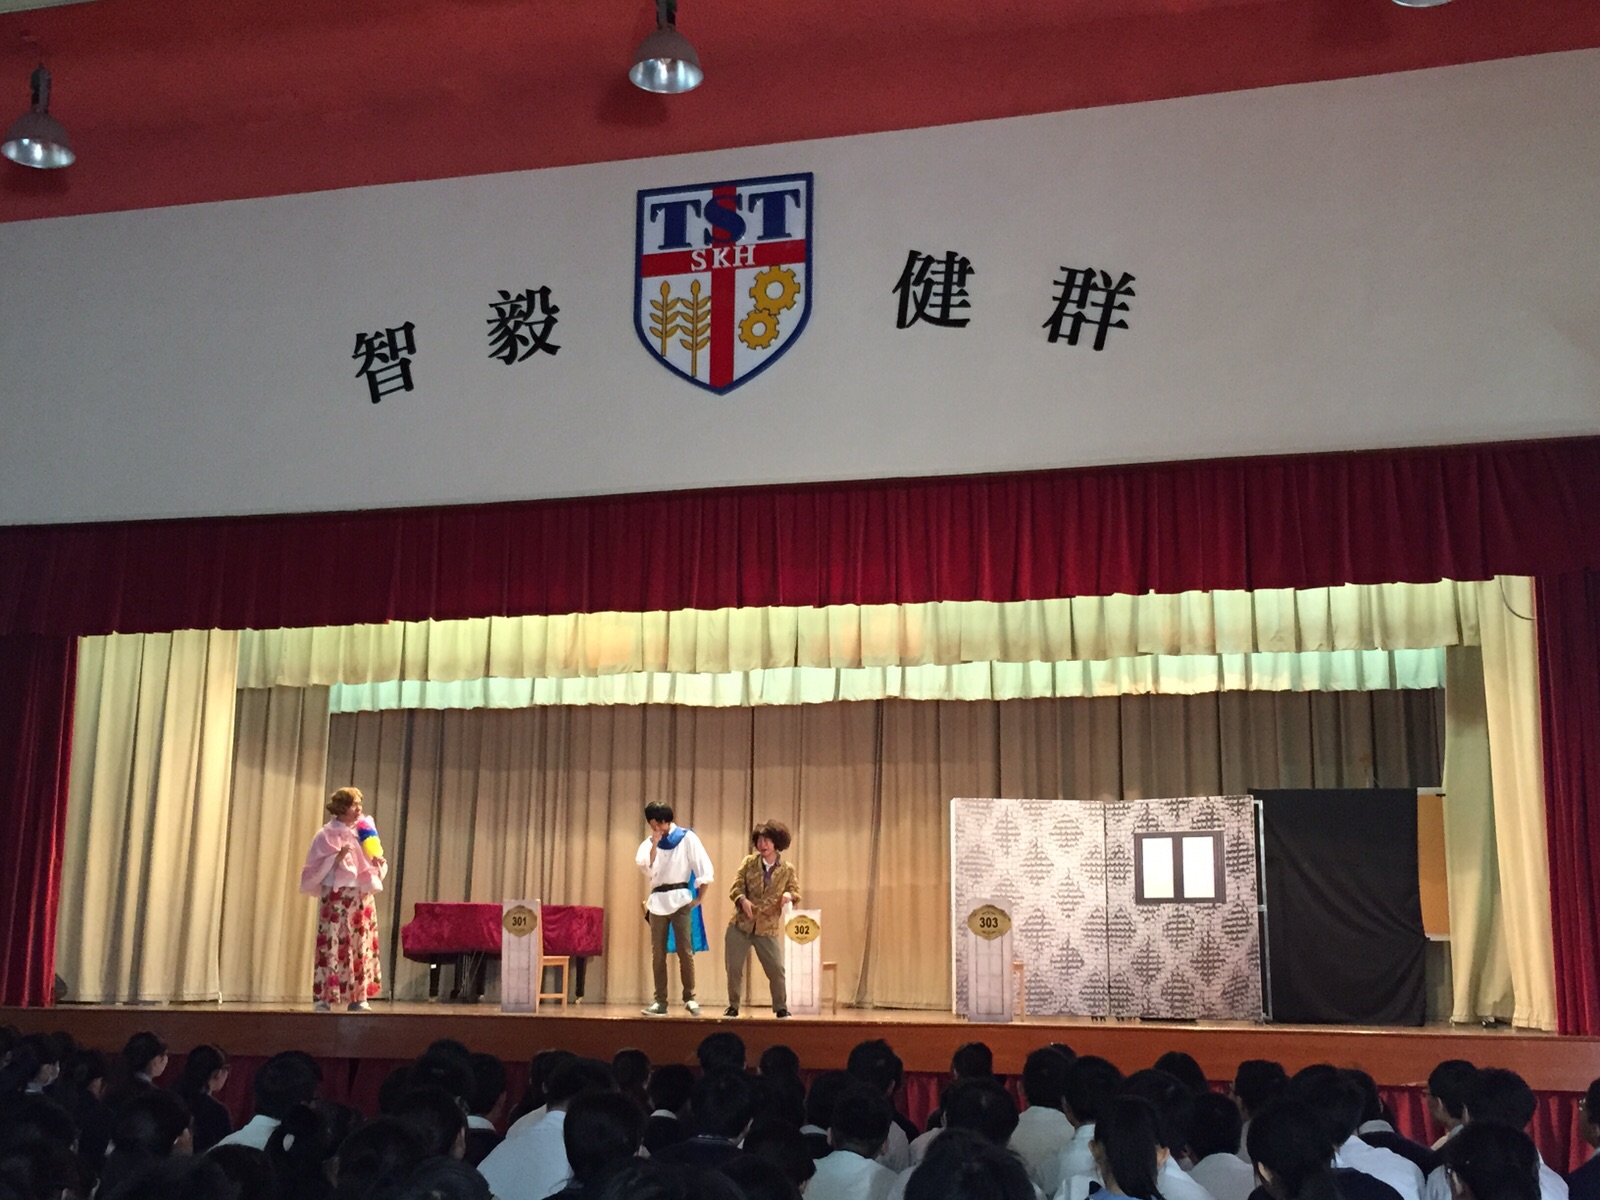 SKH Tsang Shiu Tim Secondary School